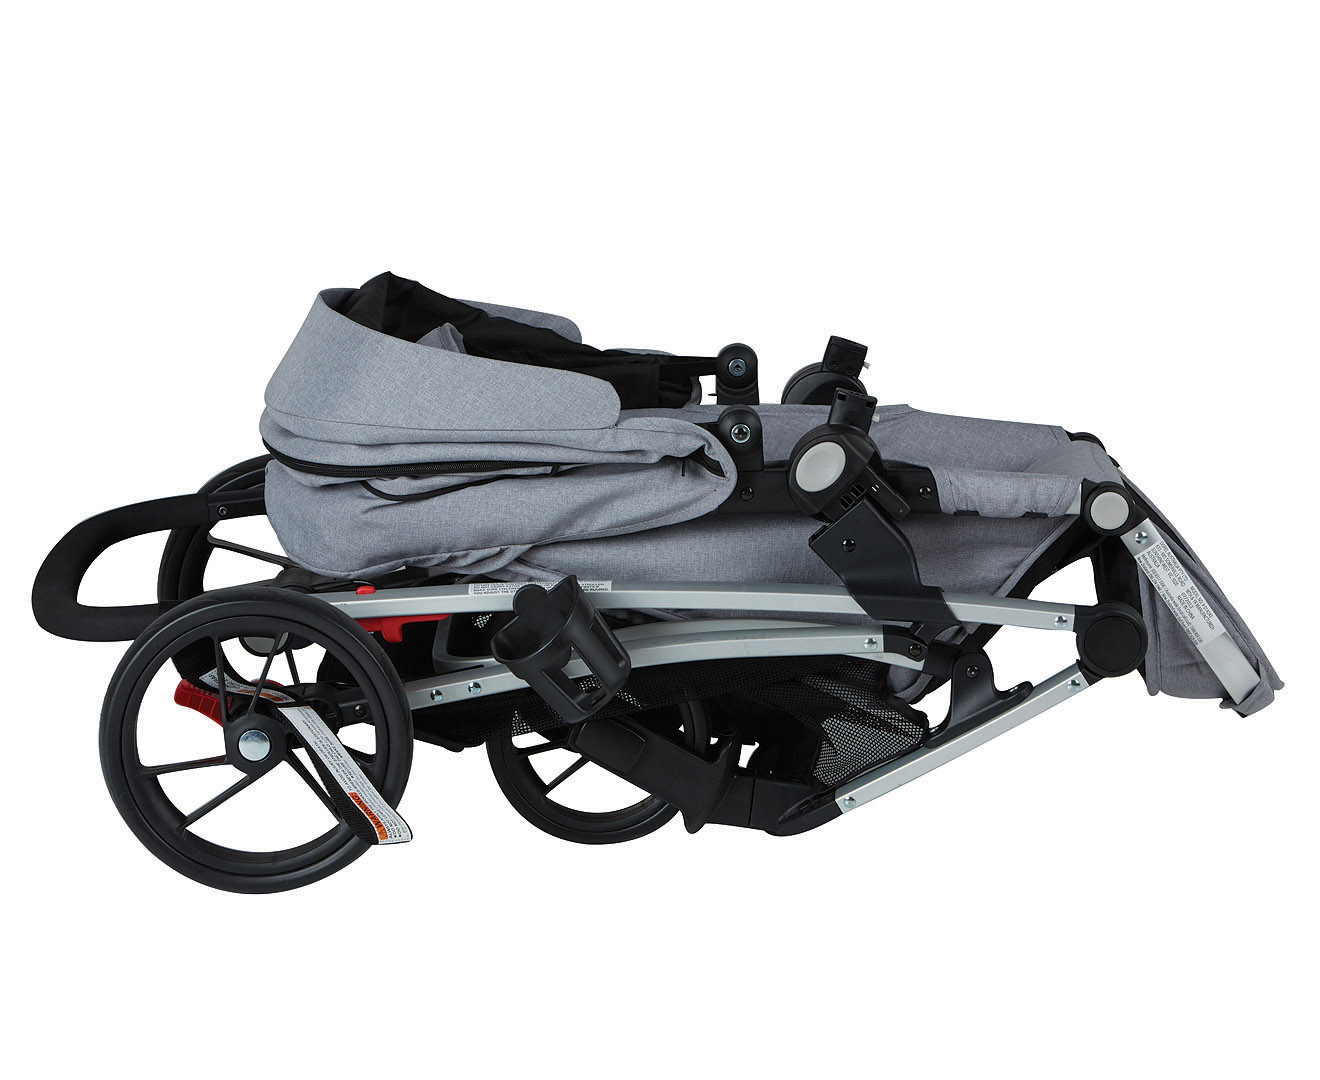 mothers choice grace stroller folded